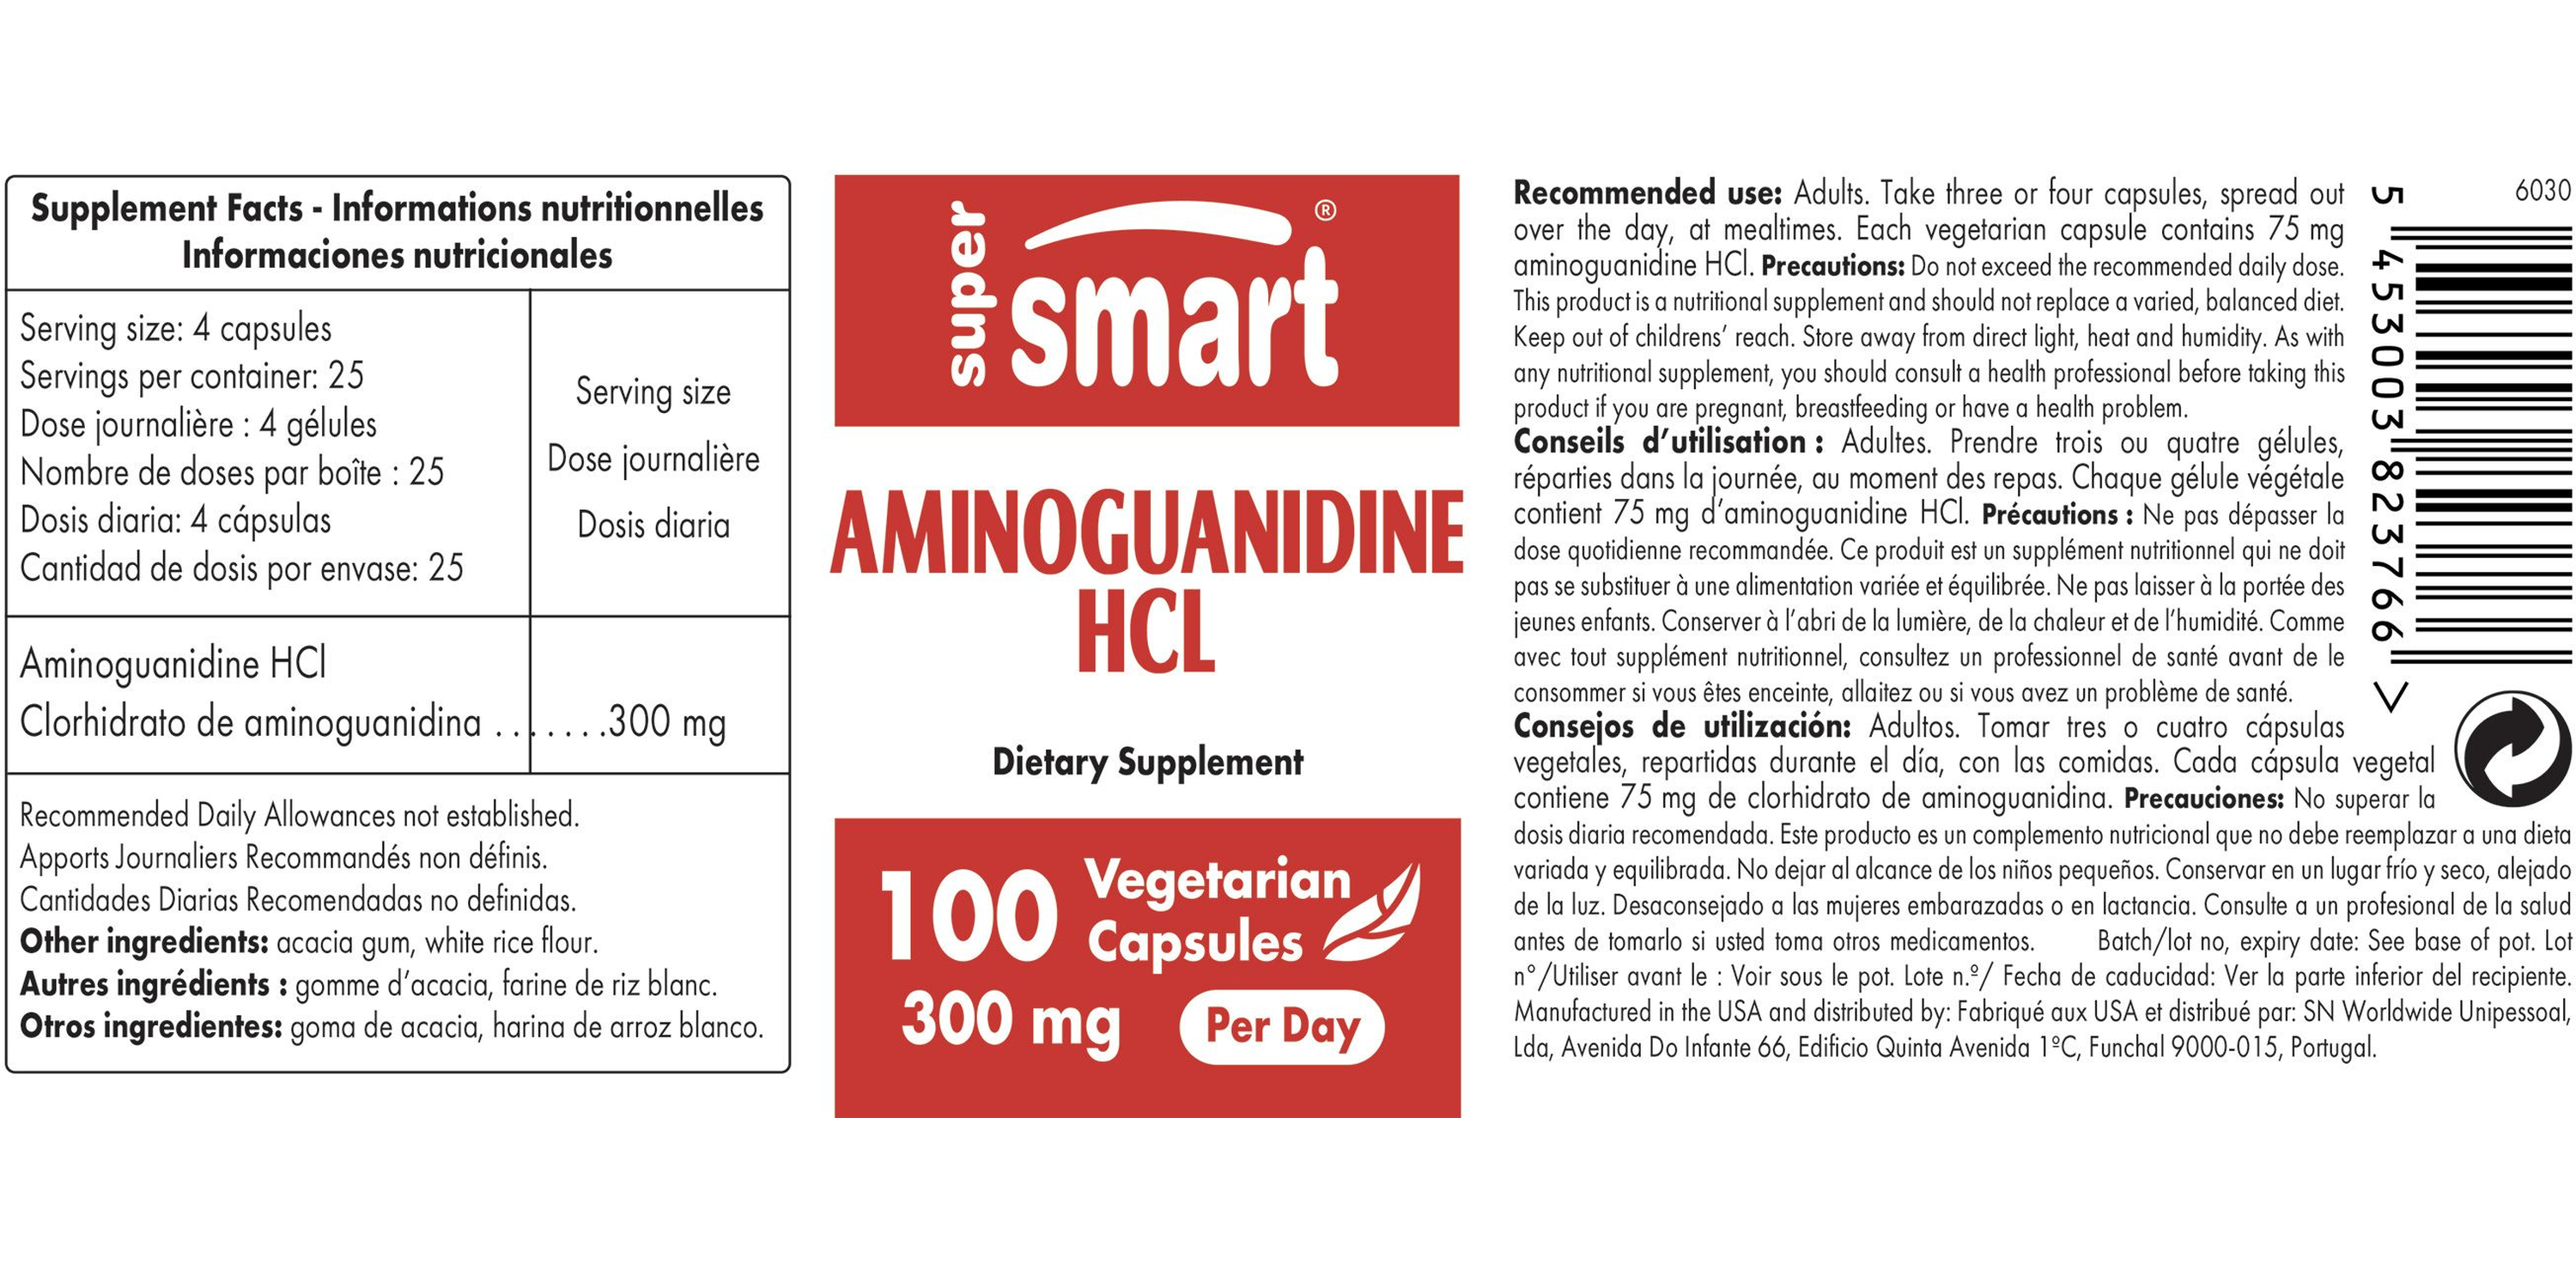 Aminoguanidine HCL